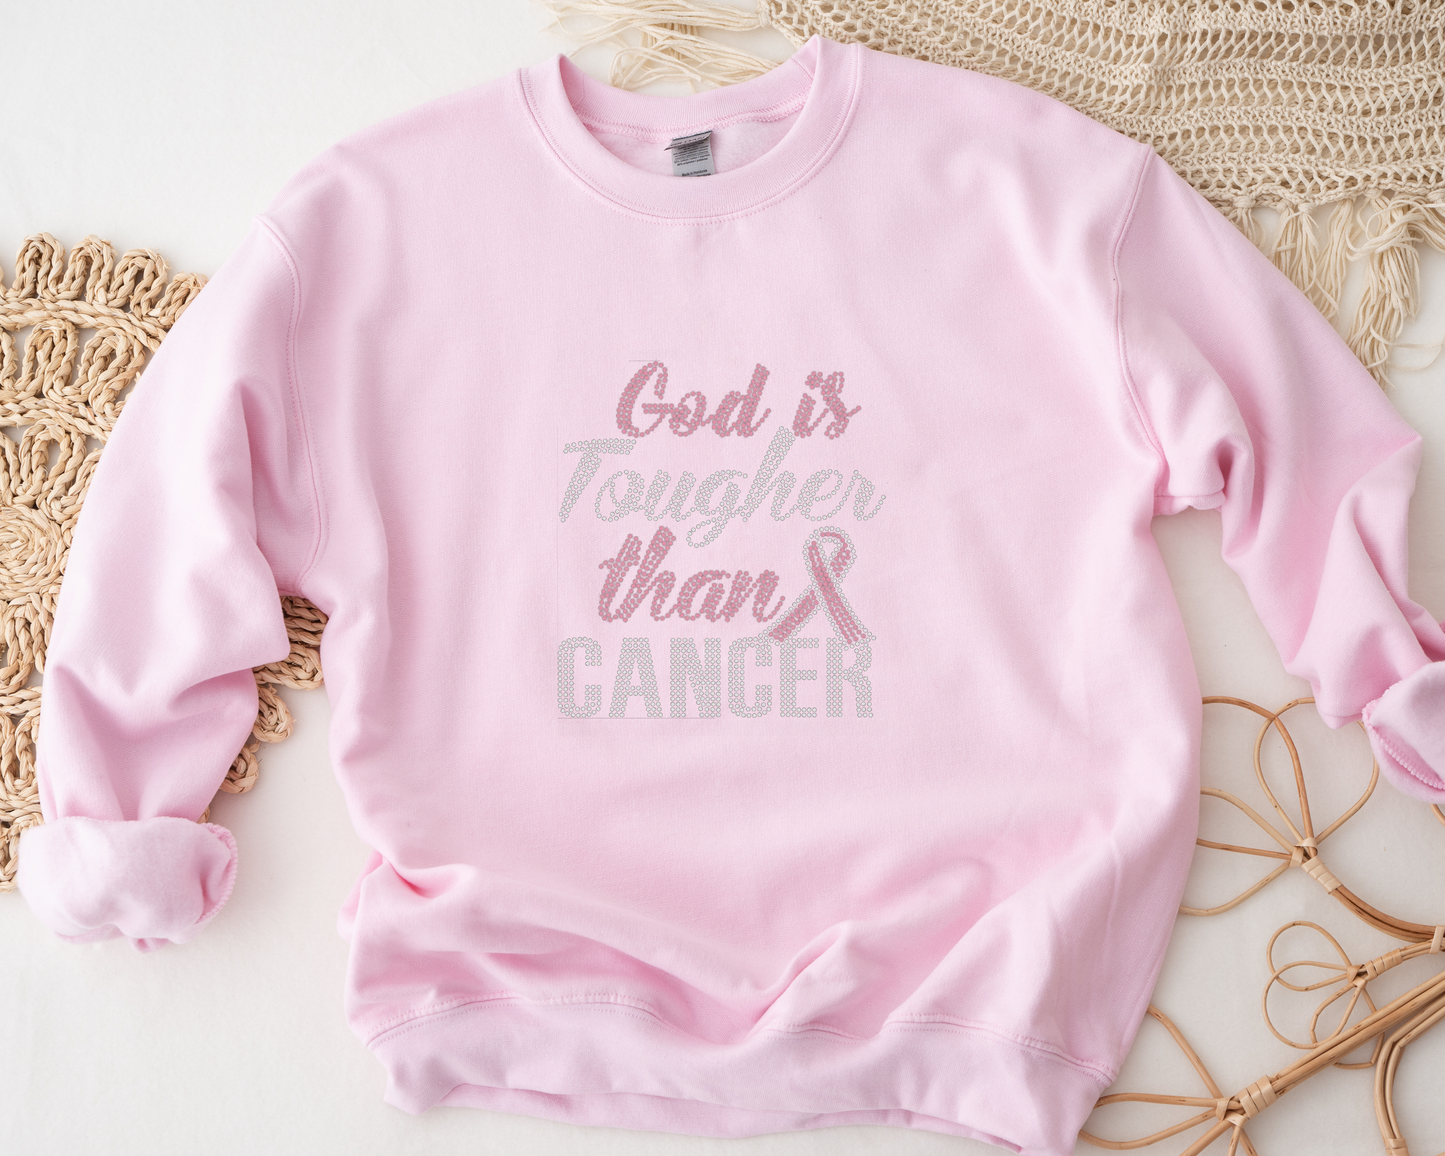 God is tougher than cancer Rhinestone hoodies/sweatshirts